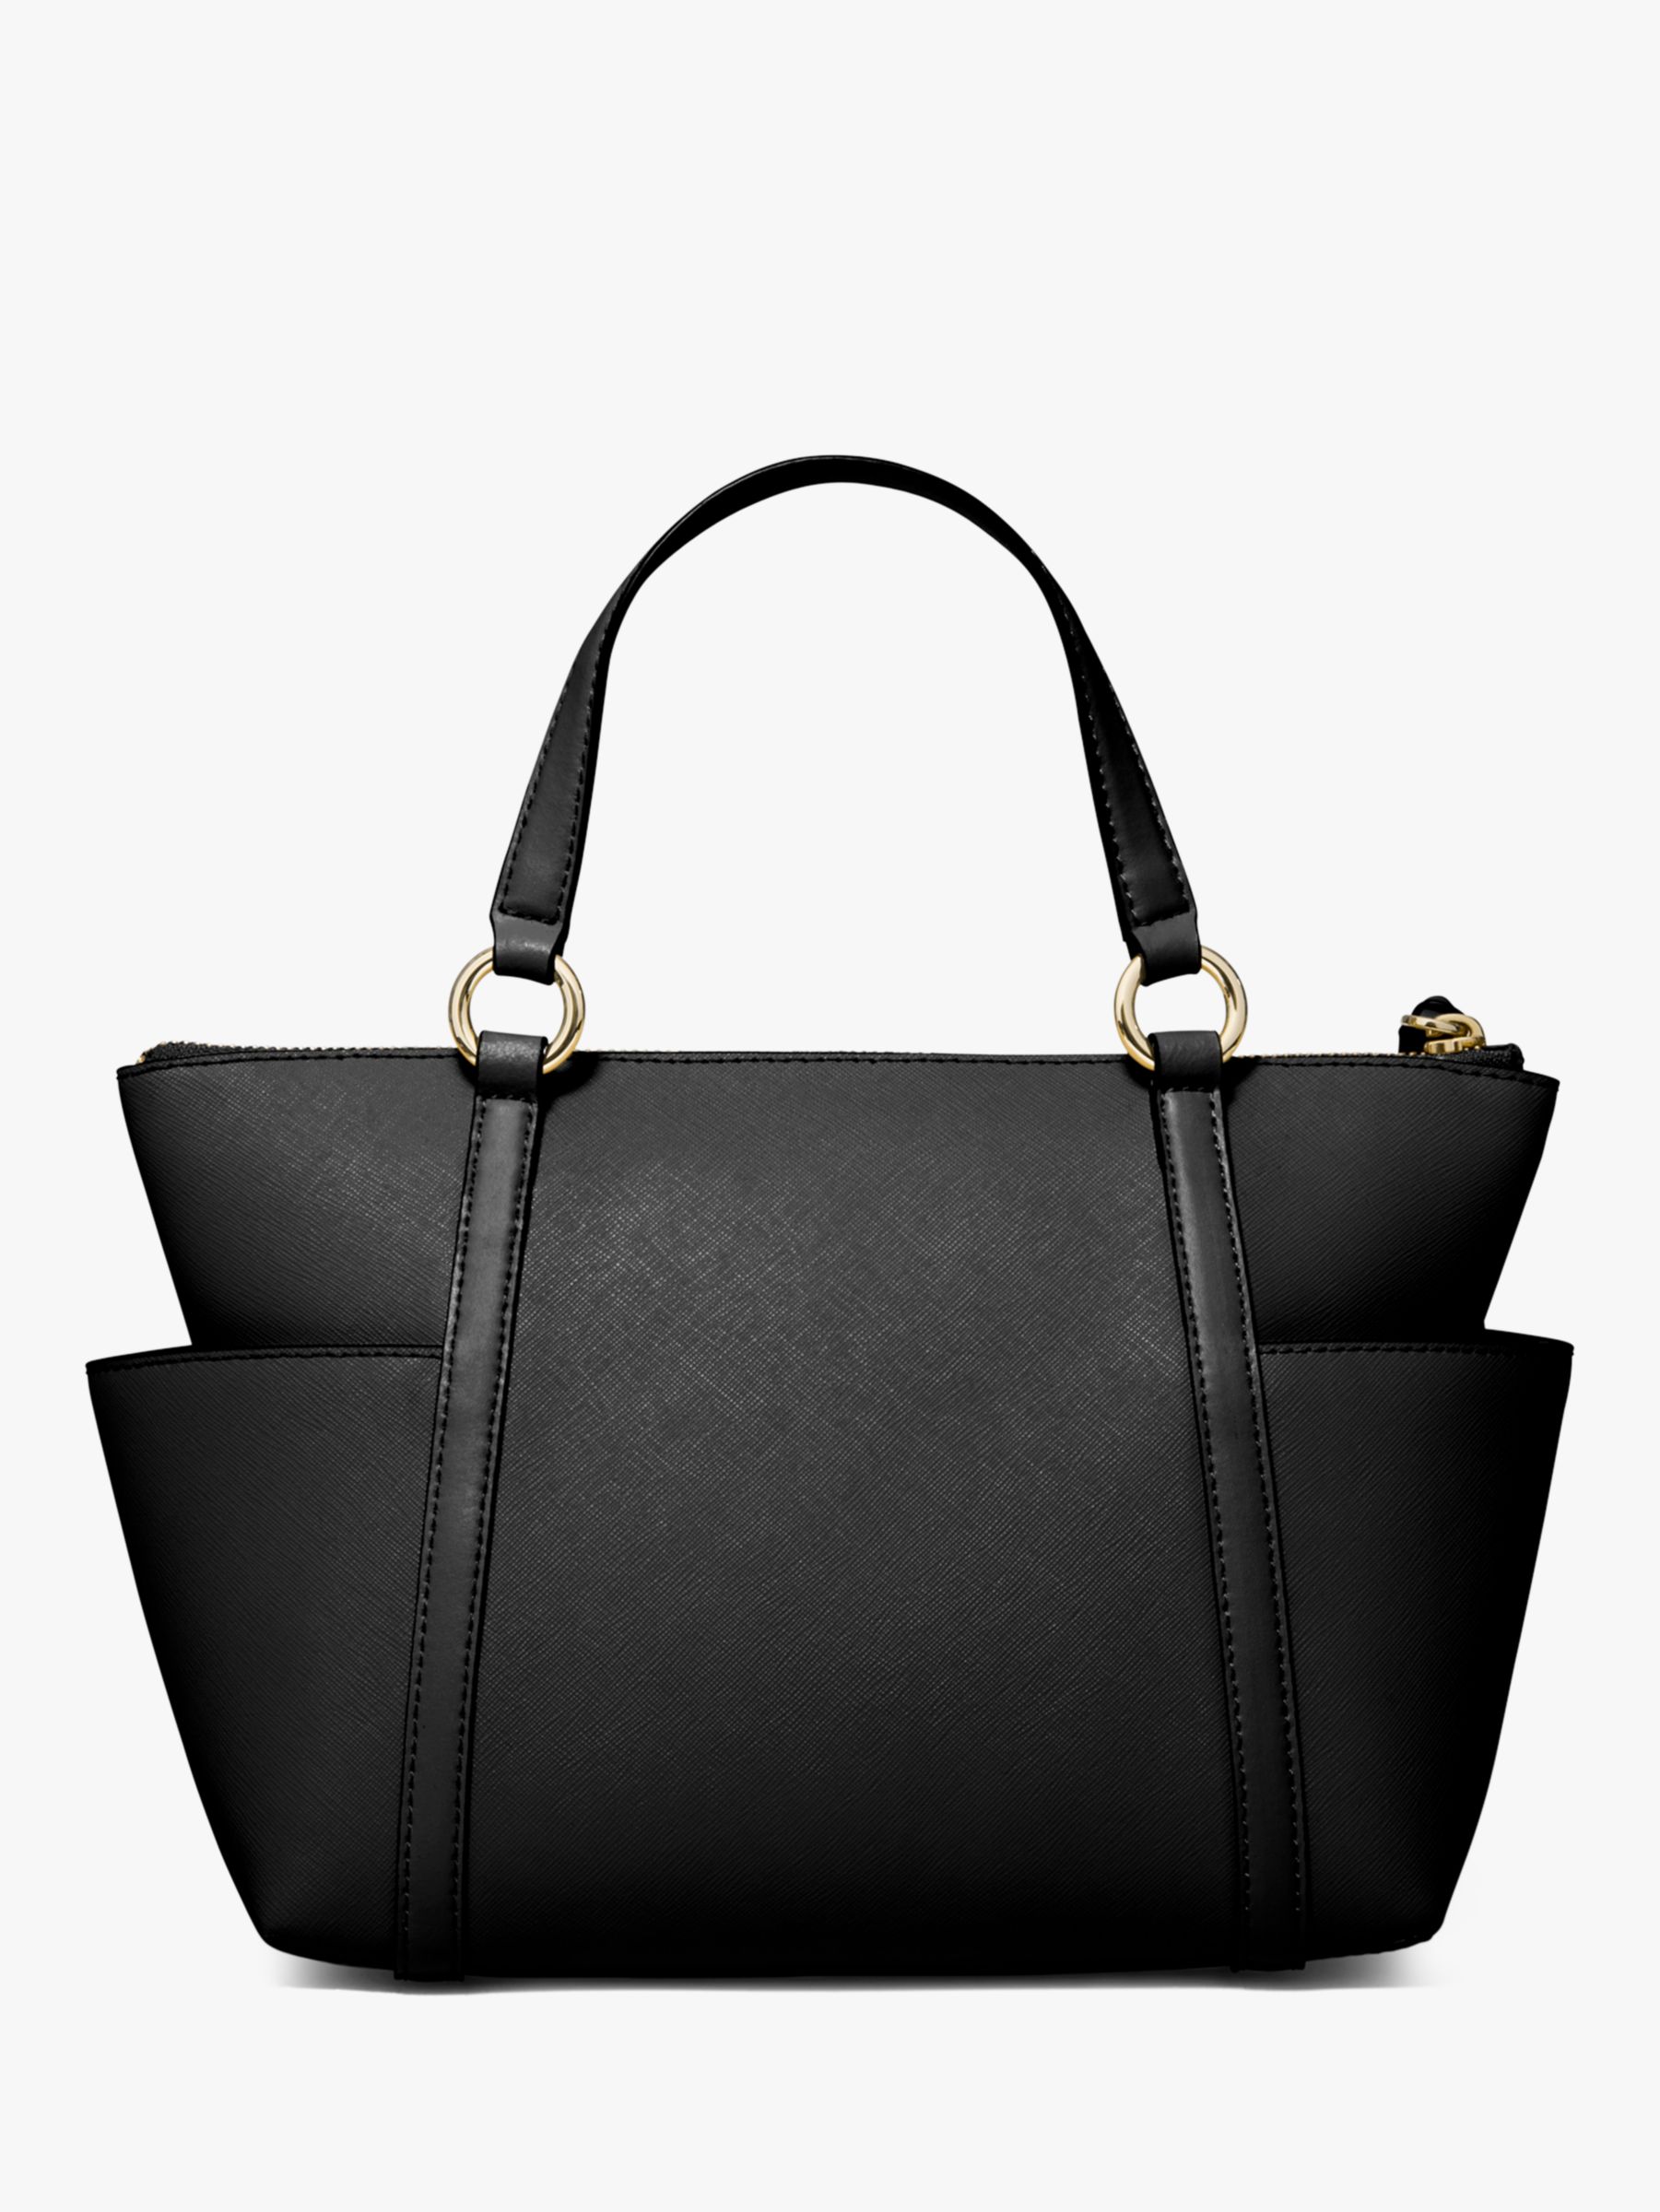 MICHAEL Michael Kors Sullivan Small Leather Tote Bag, Black